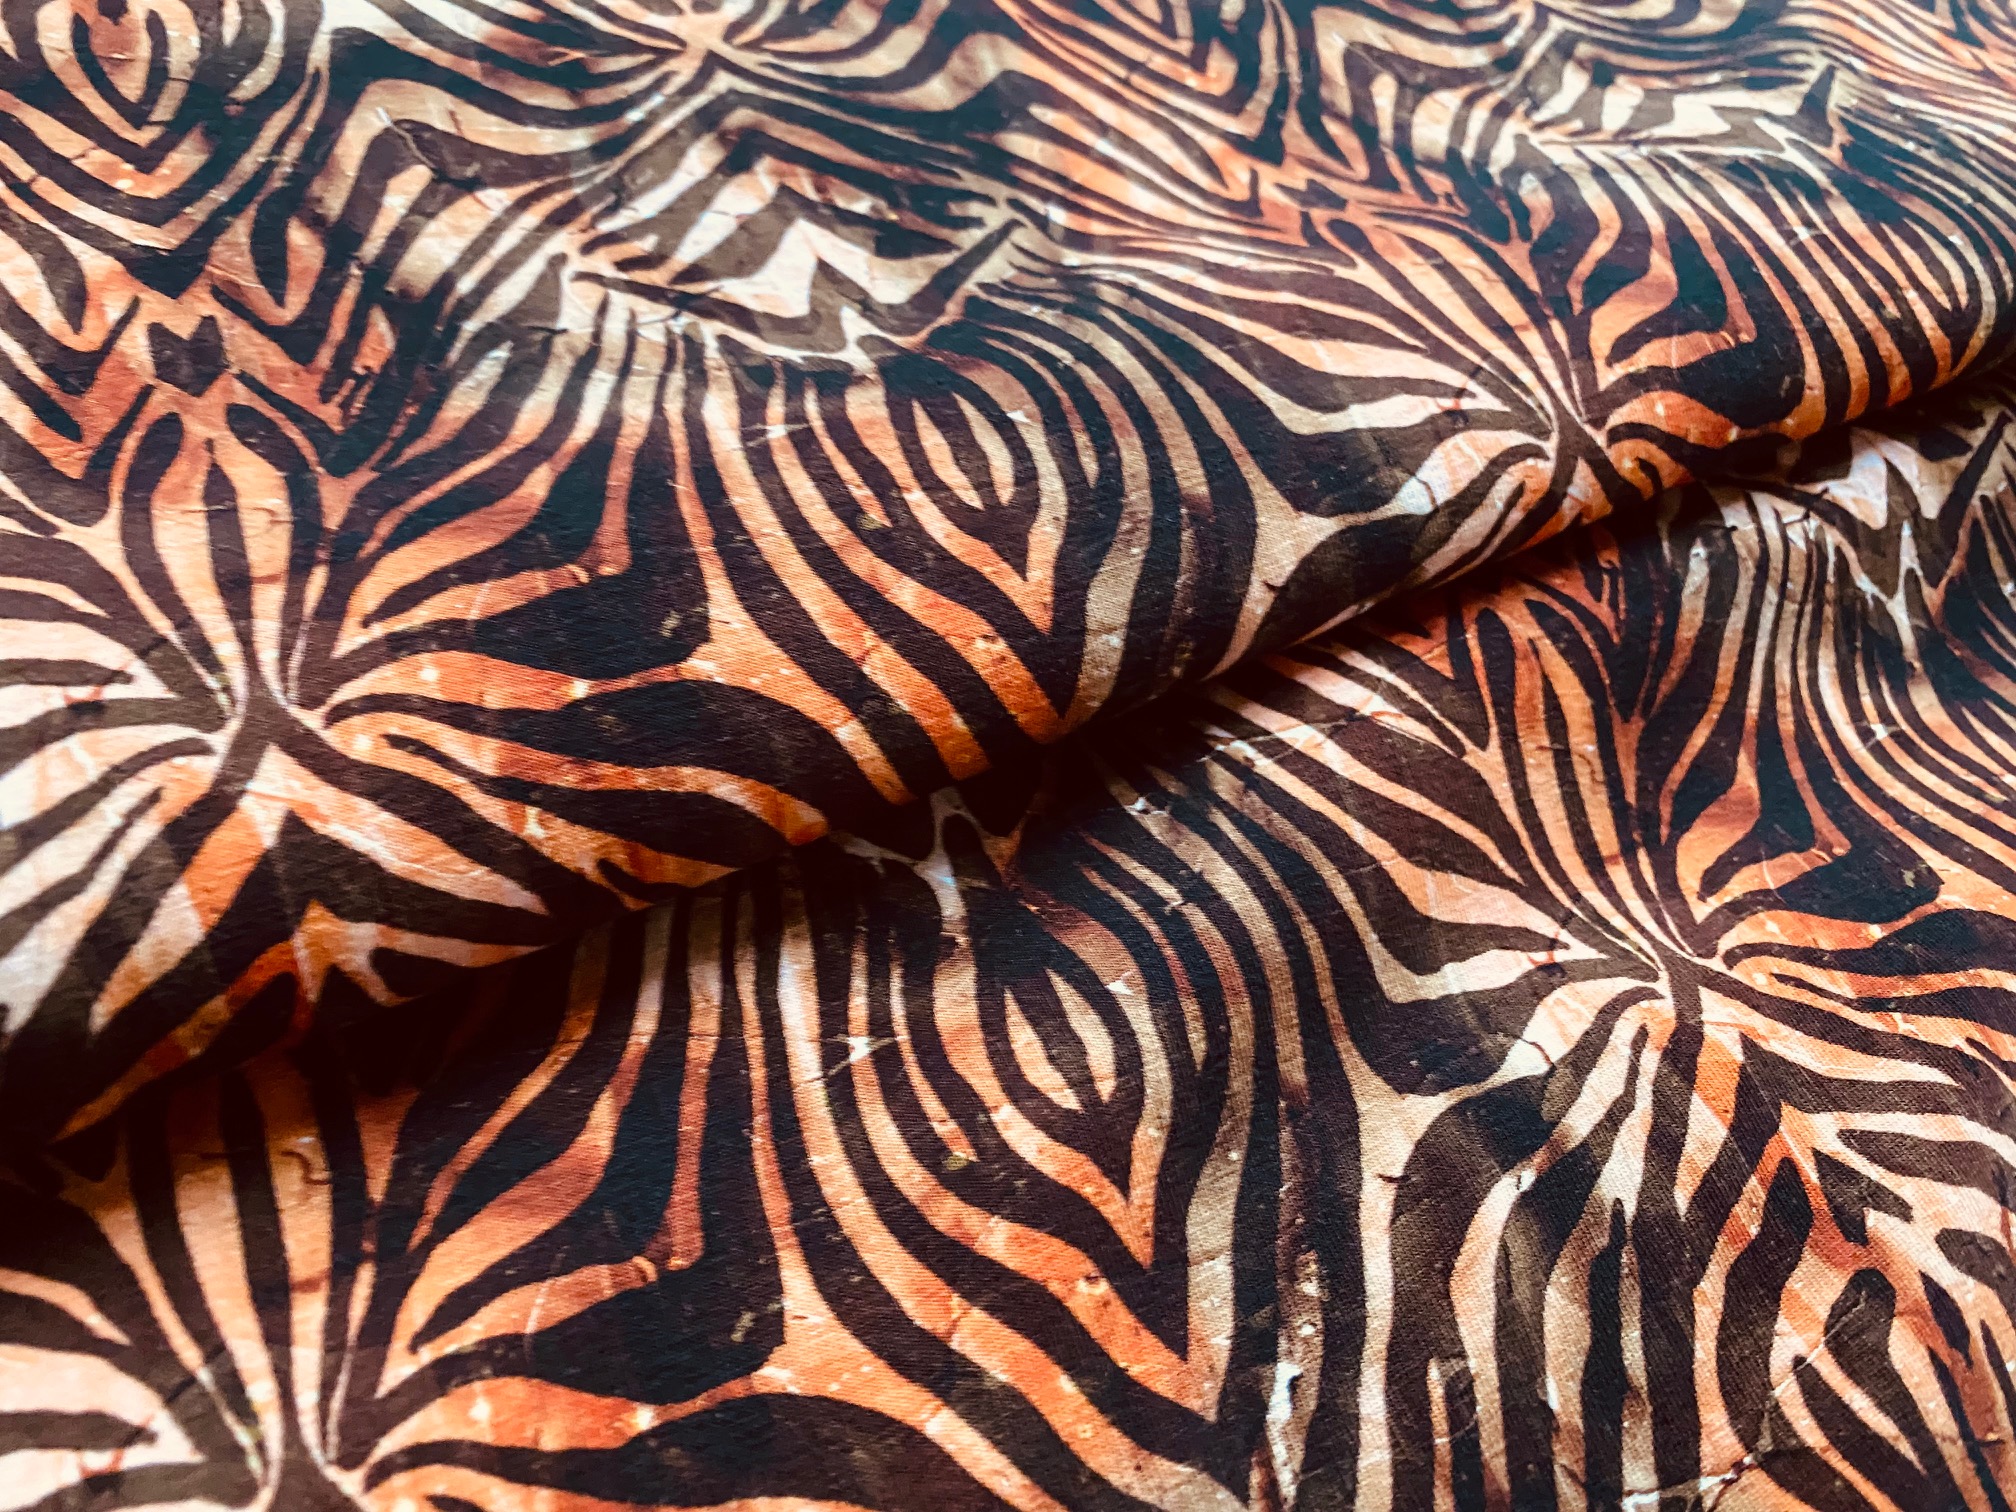 Jersey Zebra Rostbraun Animal Print